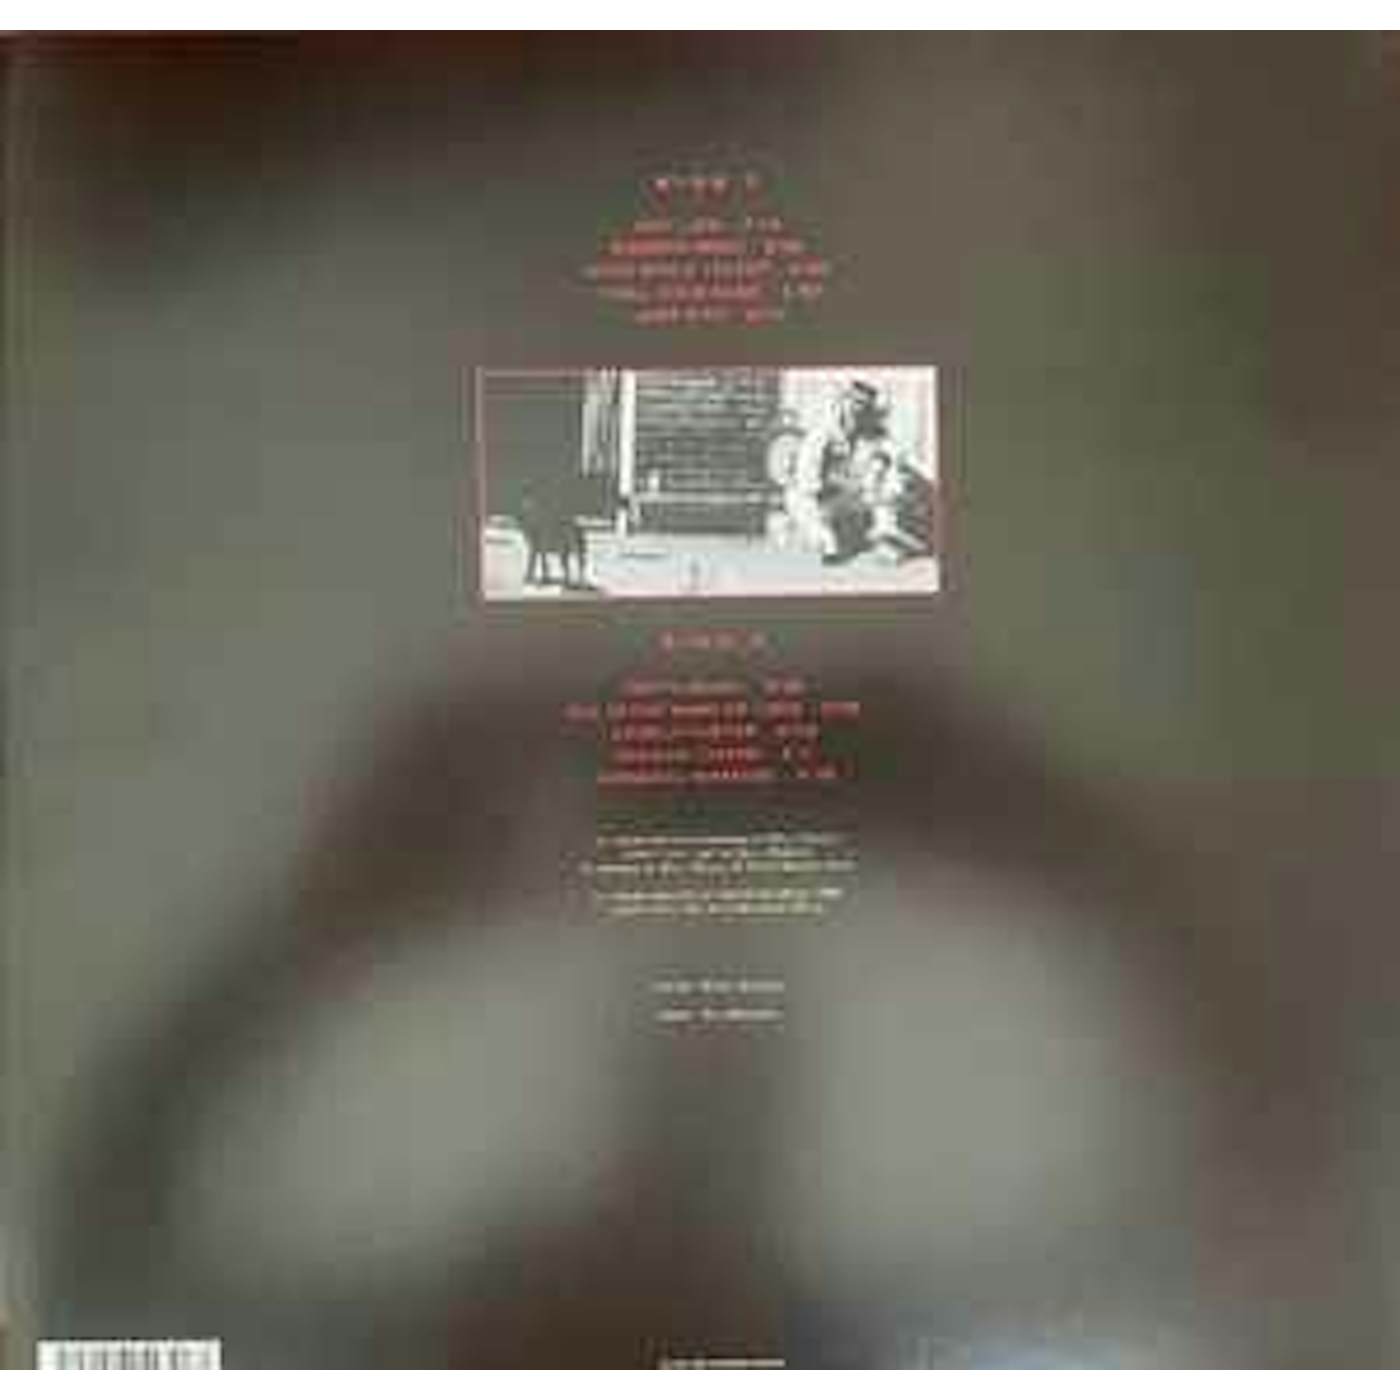 Willy deVille / Backstreets of Desire - LP (Vinyl)